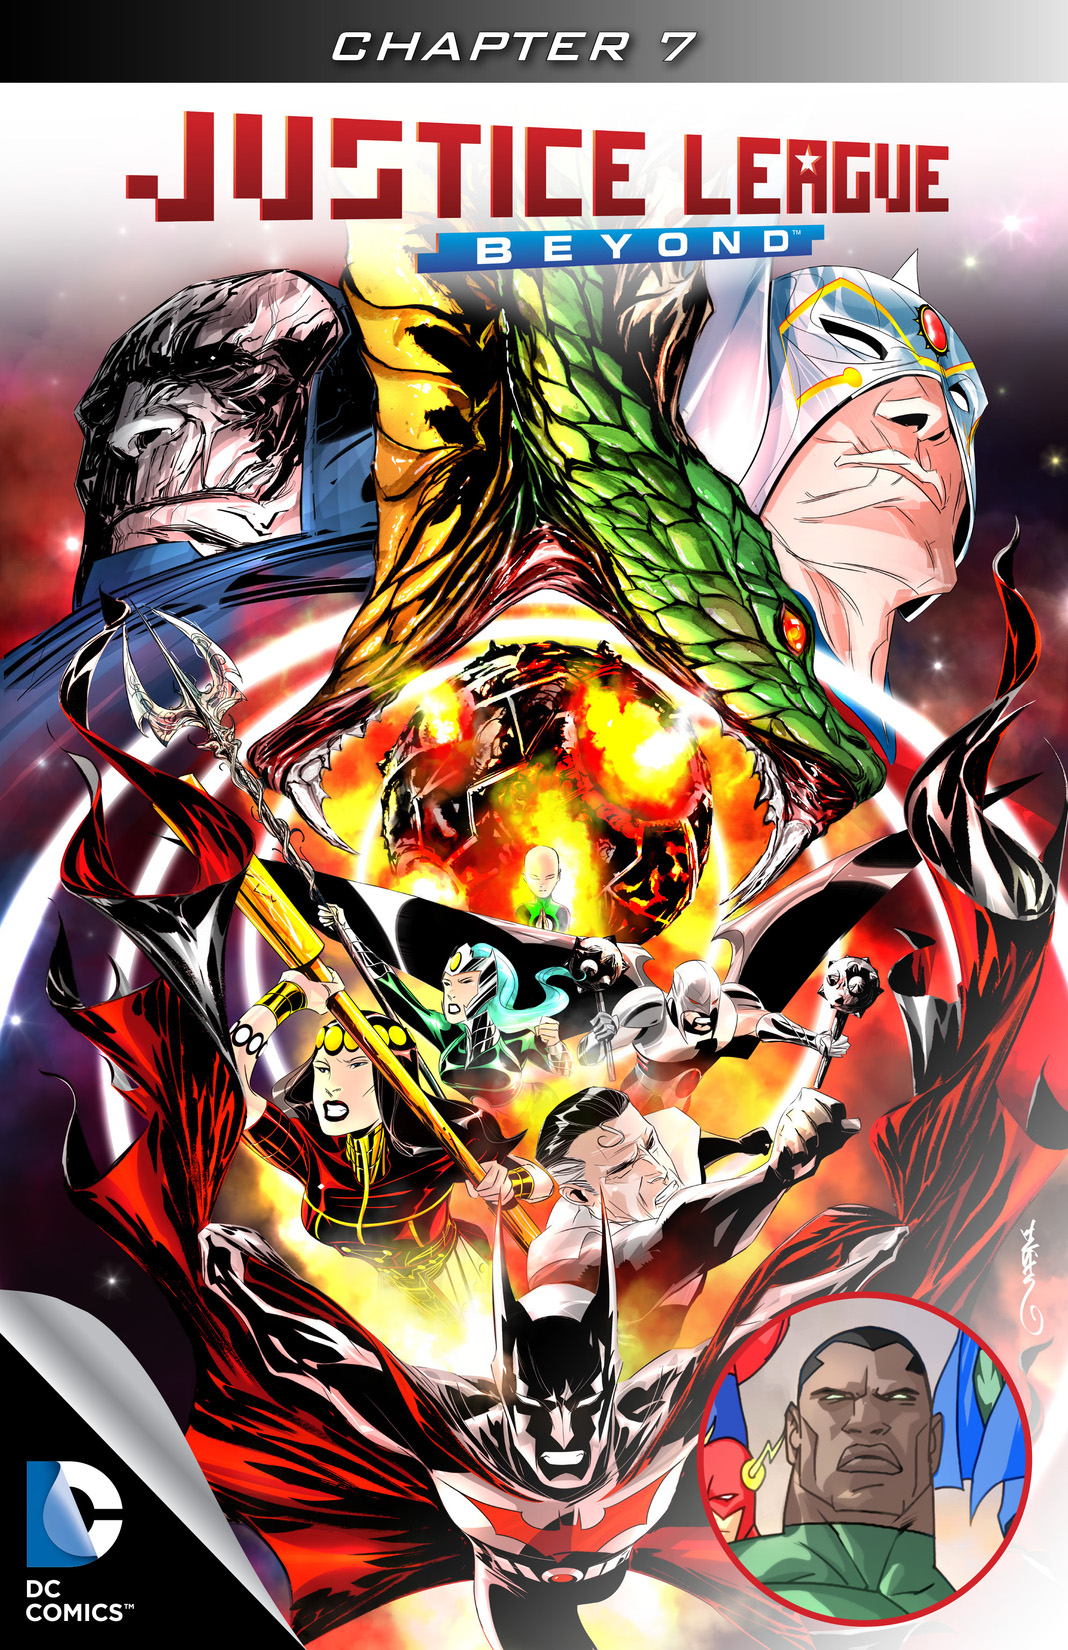 Justice League Beyond #7 preview images